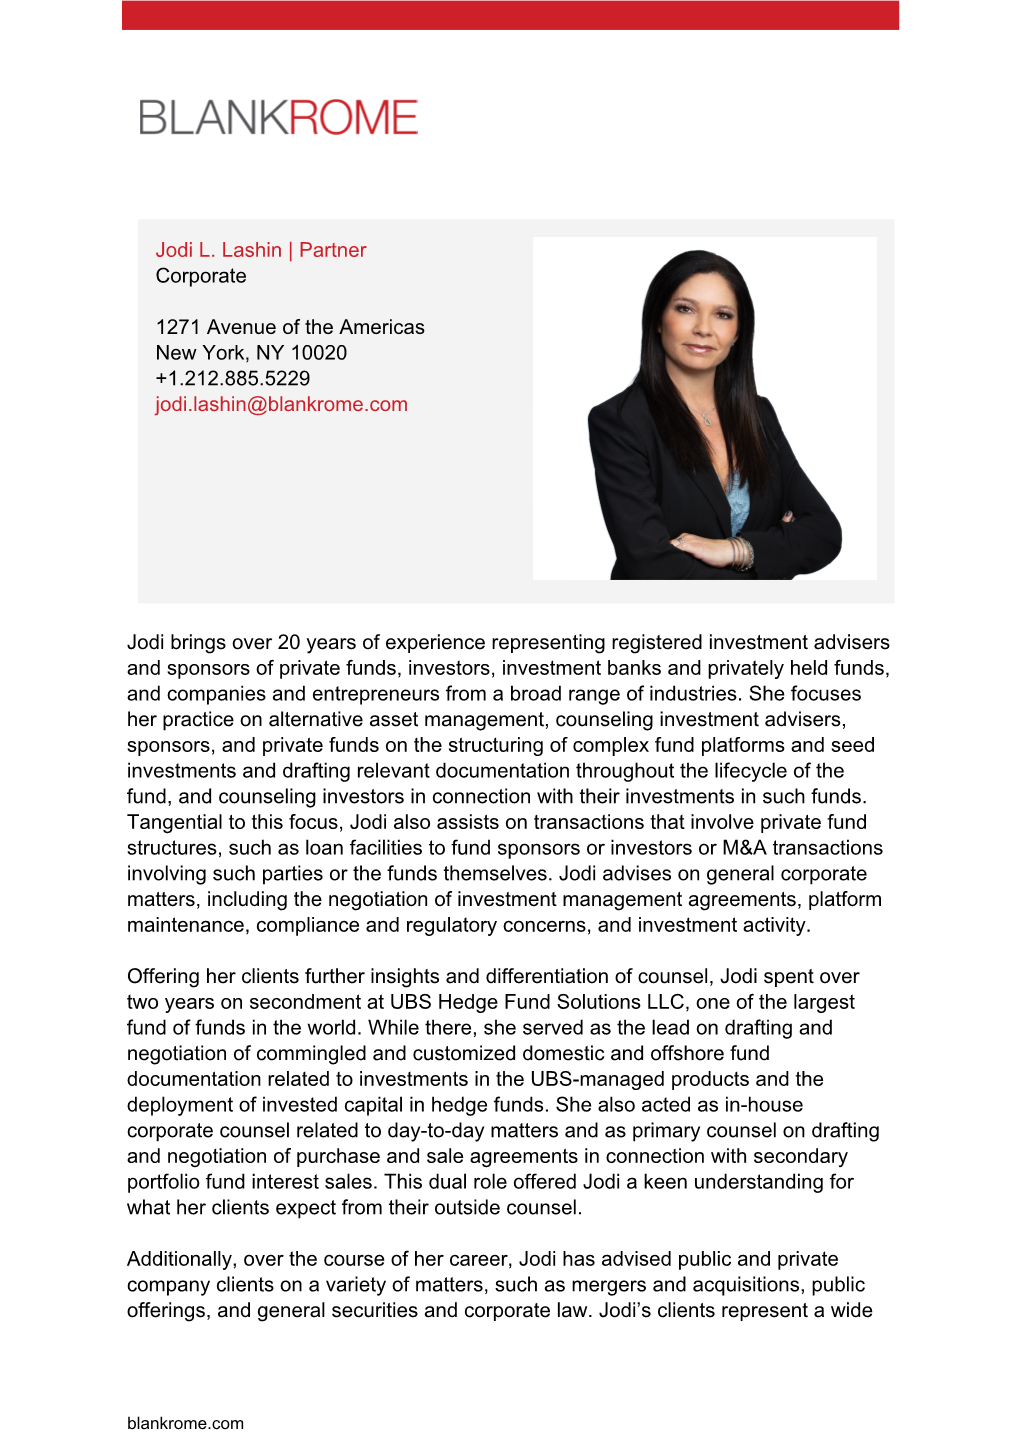 Jodi L. Lashin | Partner Corporate